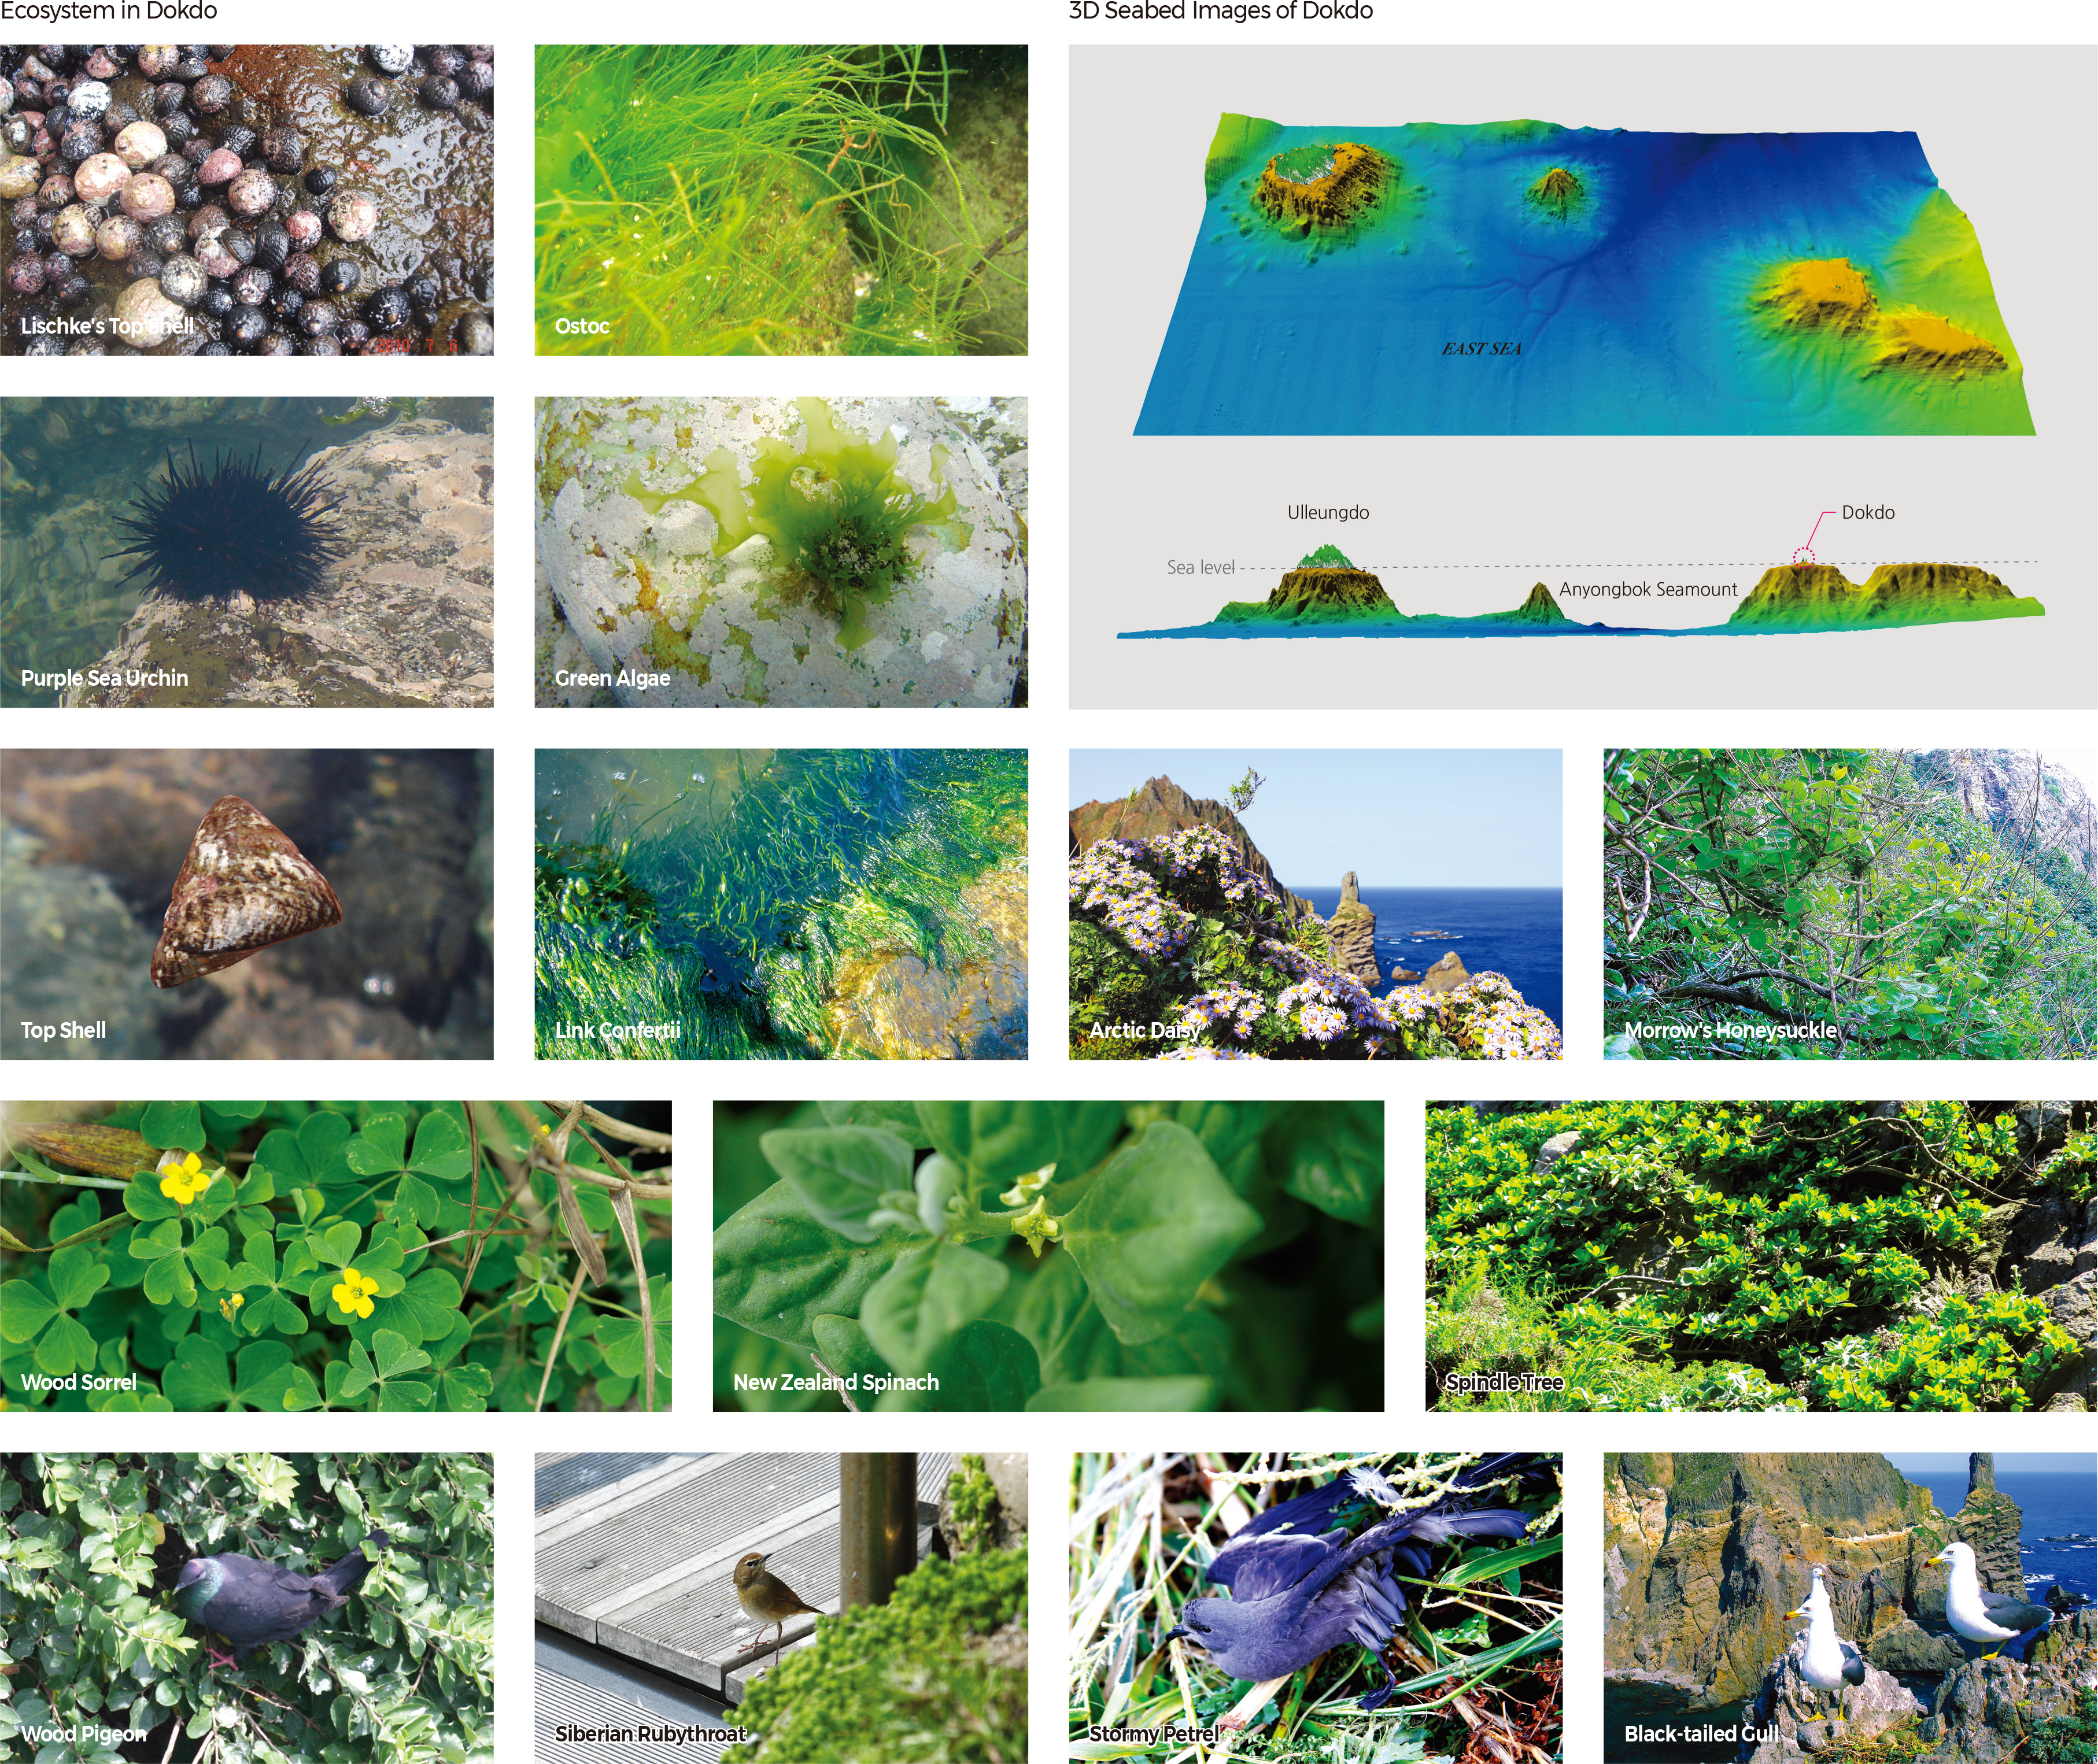 Ecosystem in Dokdo / 3D Seabed Images of Dokdo